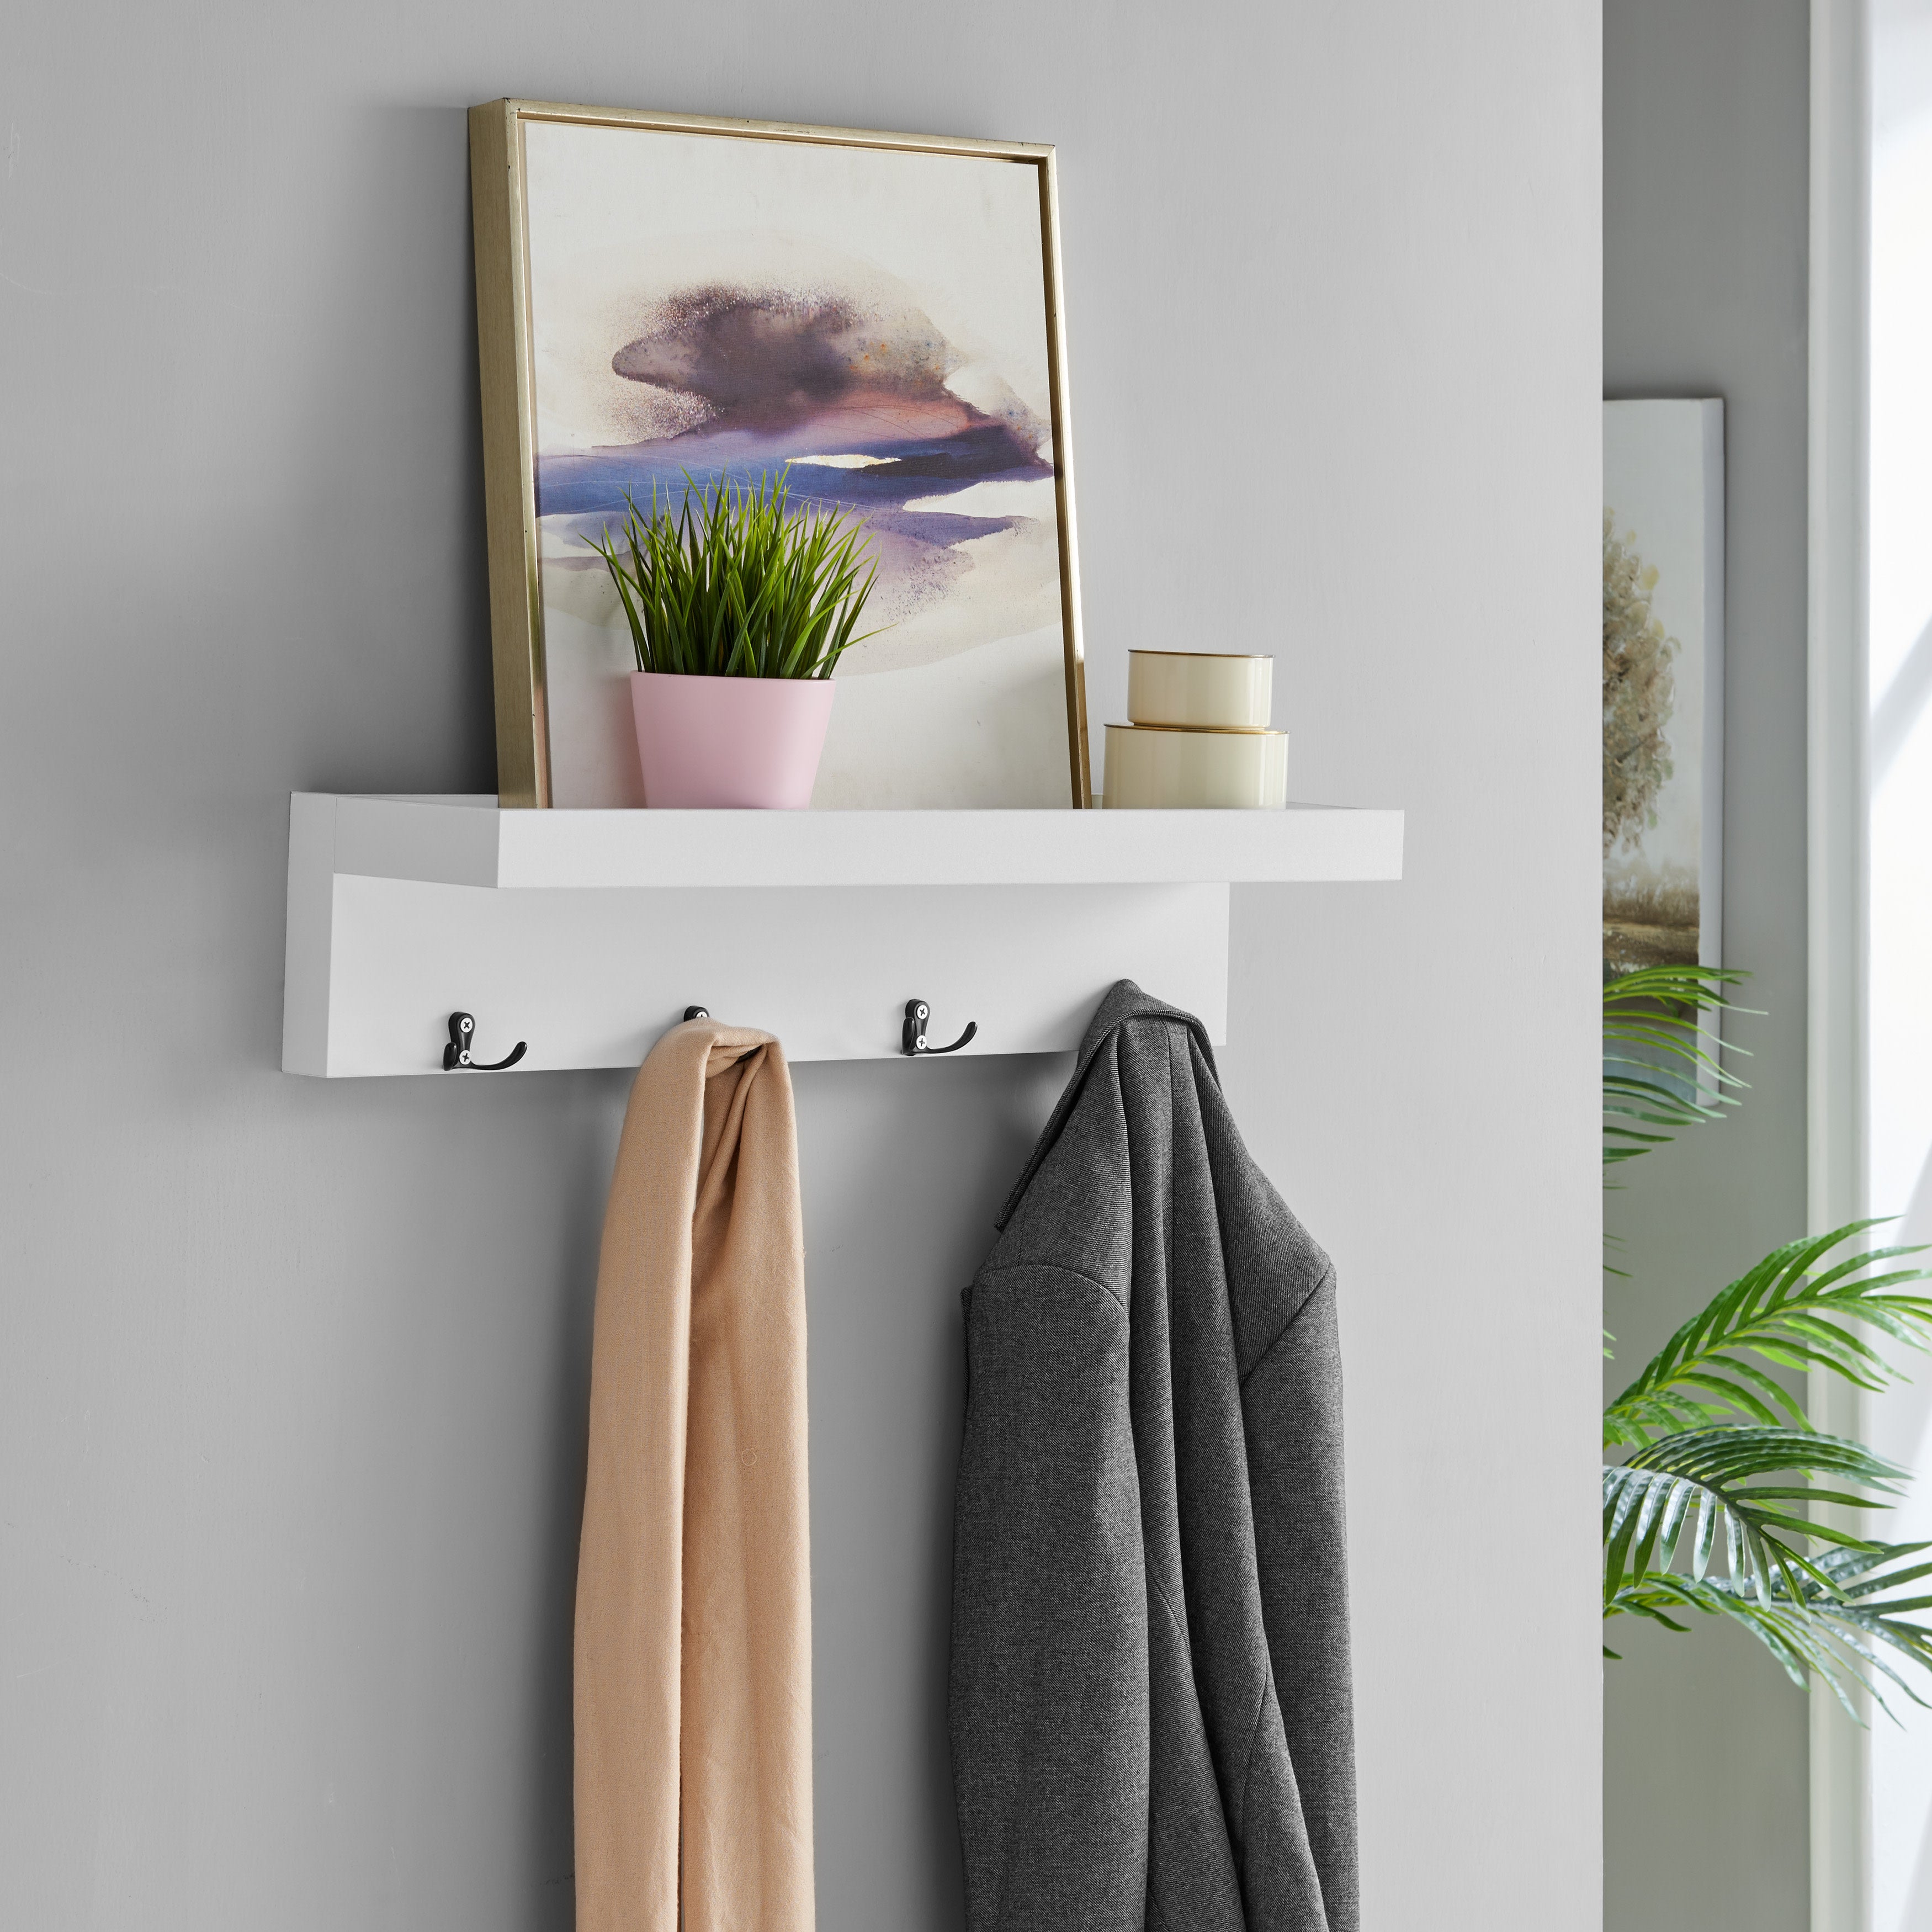 Buy Coat Rack Wall Mounted Shelf With Storage,decorative Metal